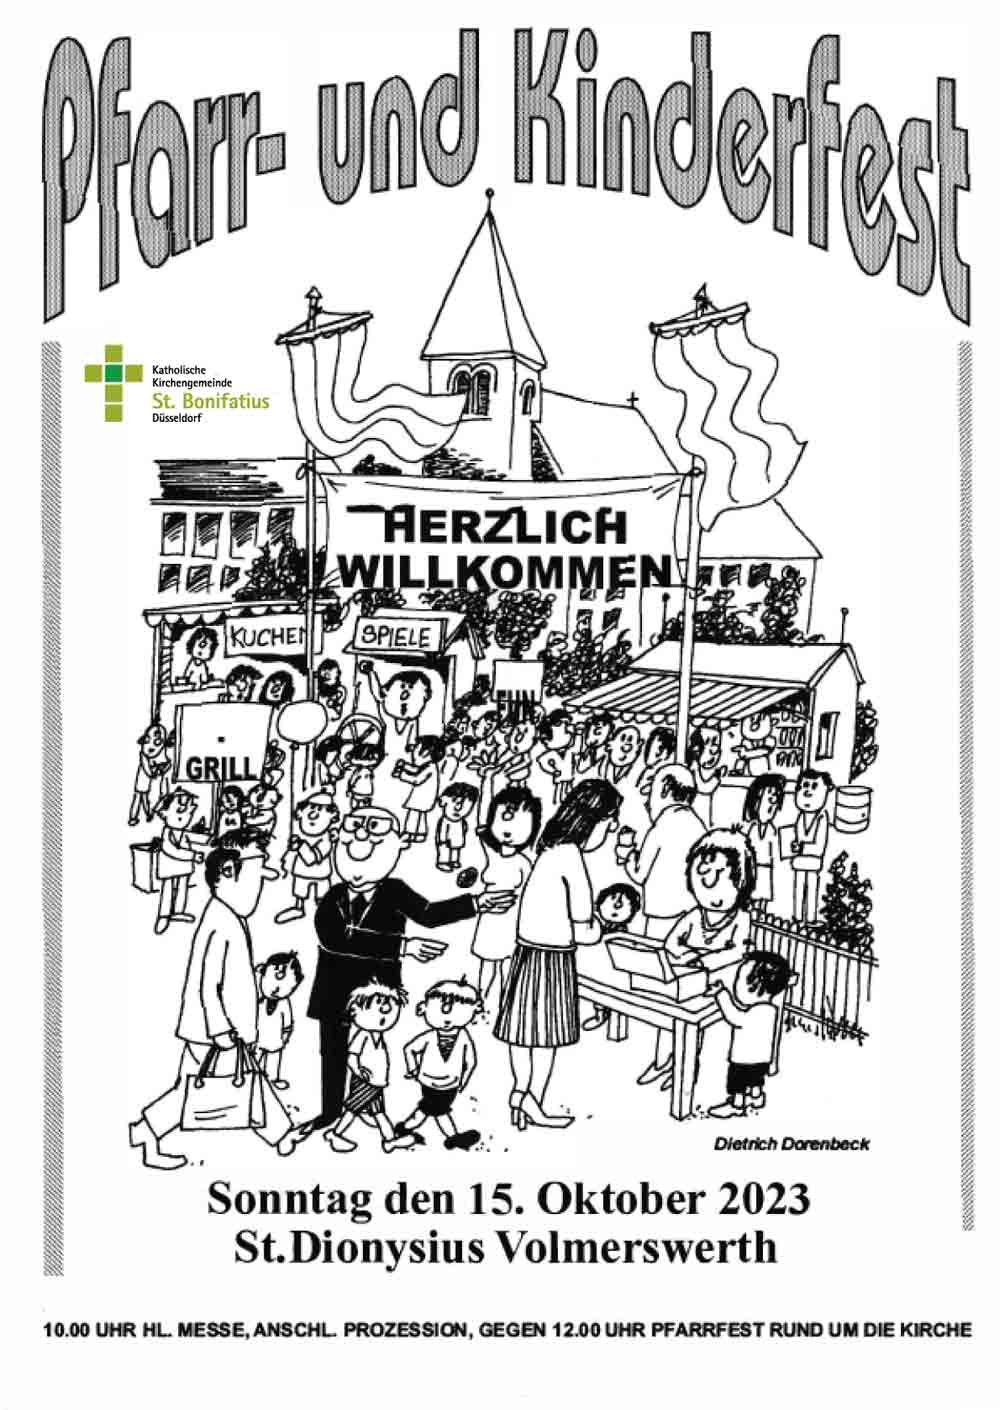 Plakat Pfarrfest 2023 Volmerswerth in der kath. Kirchengemeinde St. Bonifatius Düsseldorf (c) OA Volmerswerth der kath. Kirchengemeinde St. Bonifatius Düsseldorf